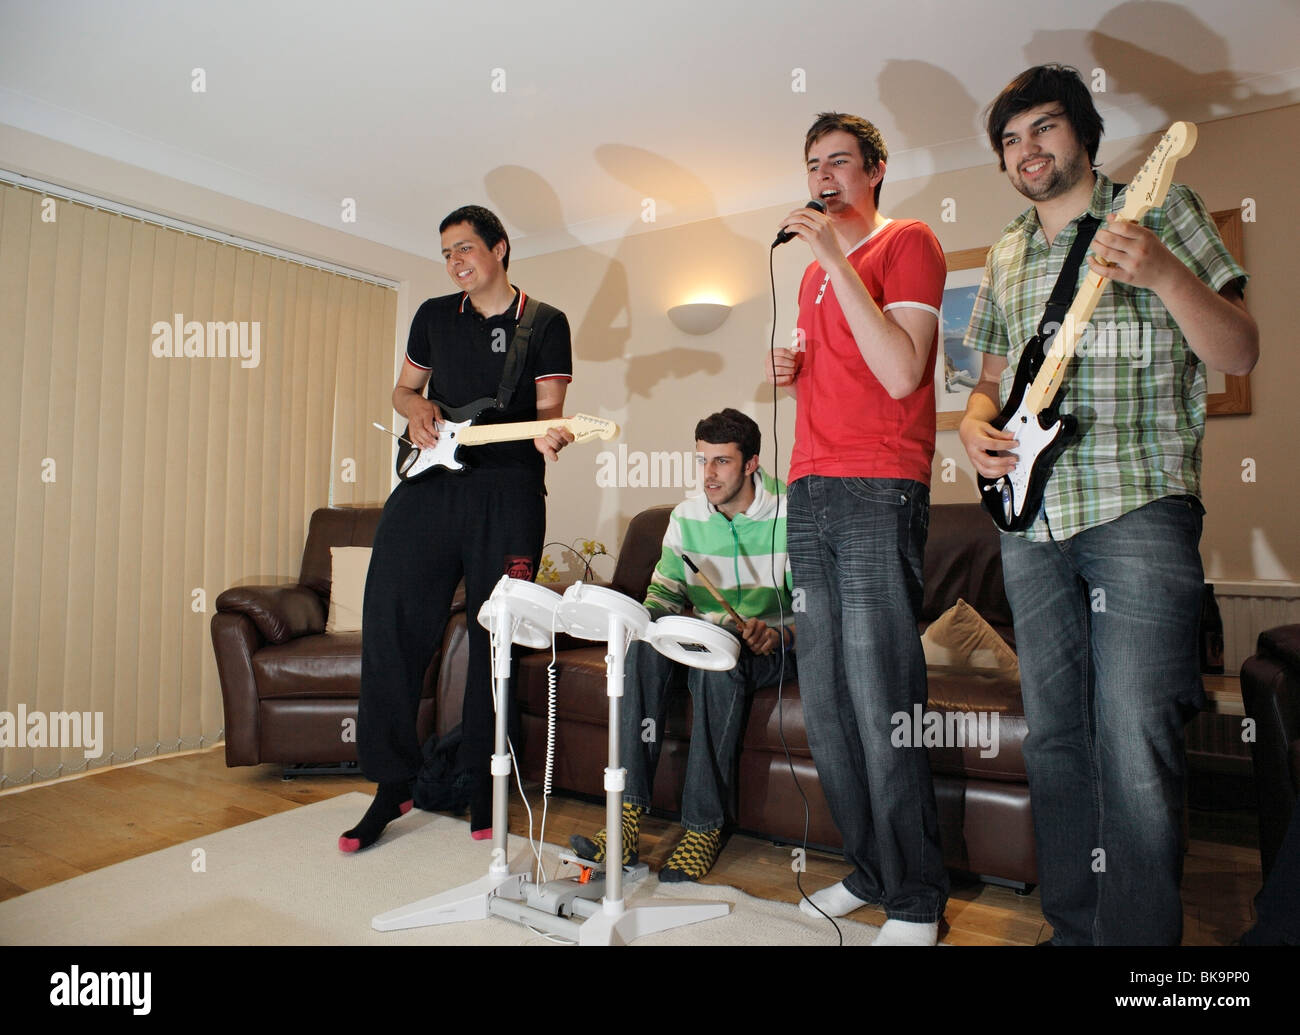 Adolescents jouant Rock Band jeu informatique. Banque D'Images